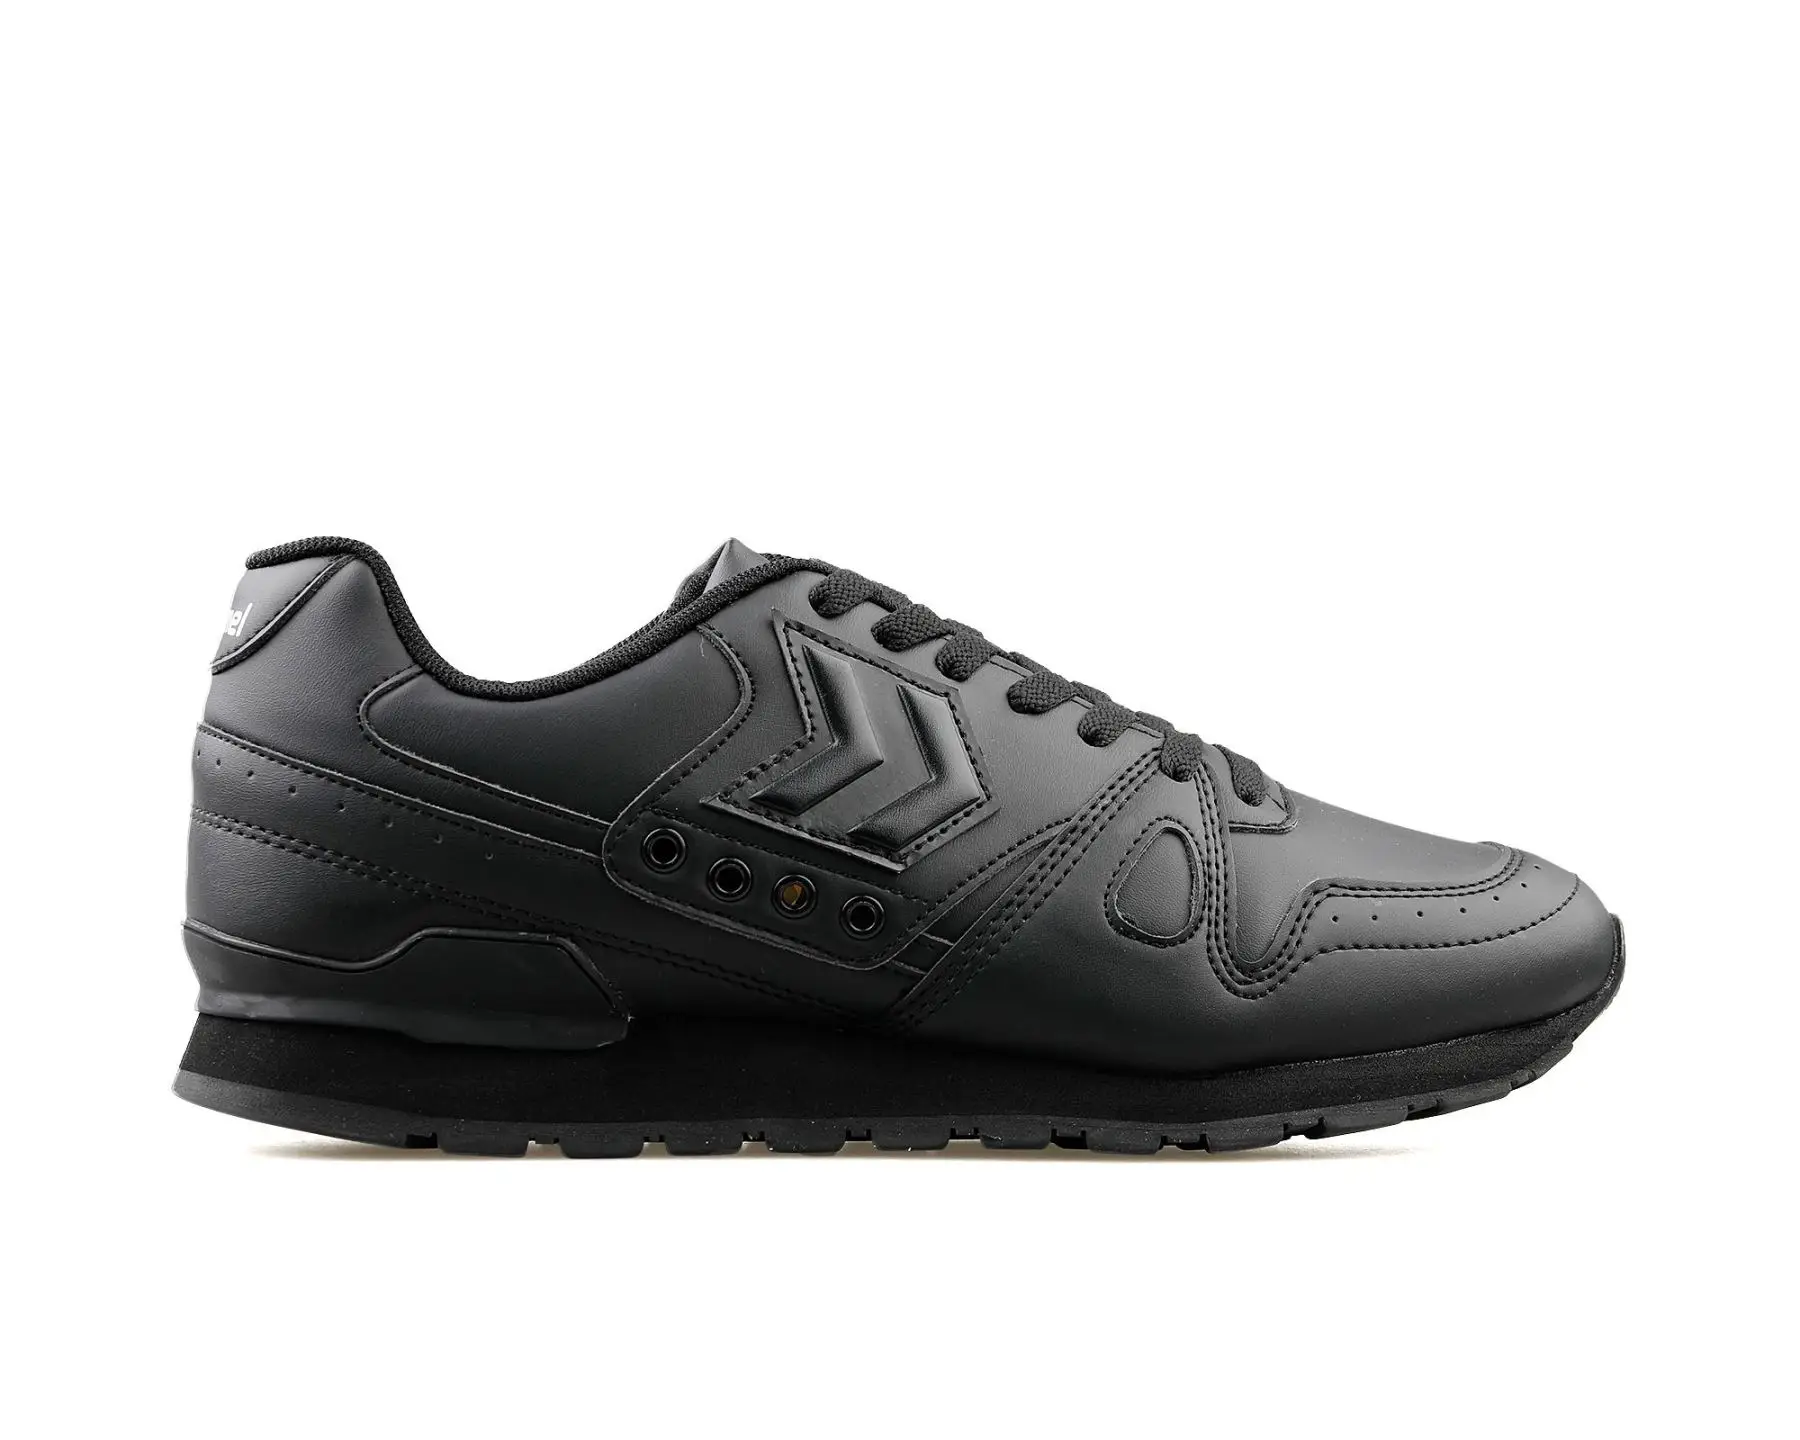 

Hummel Original Men's Sneakers Casual Sneakers Black Color Casual Running Casual Walking Shoes Hml Marathona Sneaker Pu